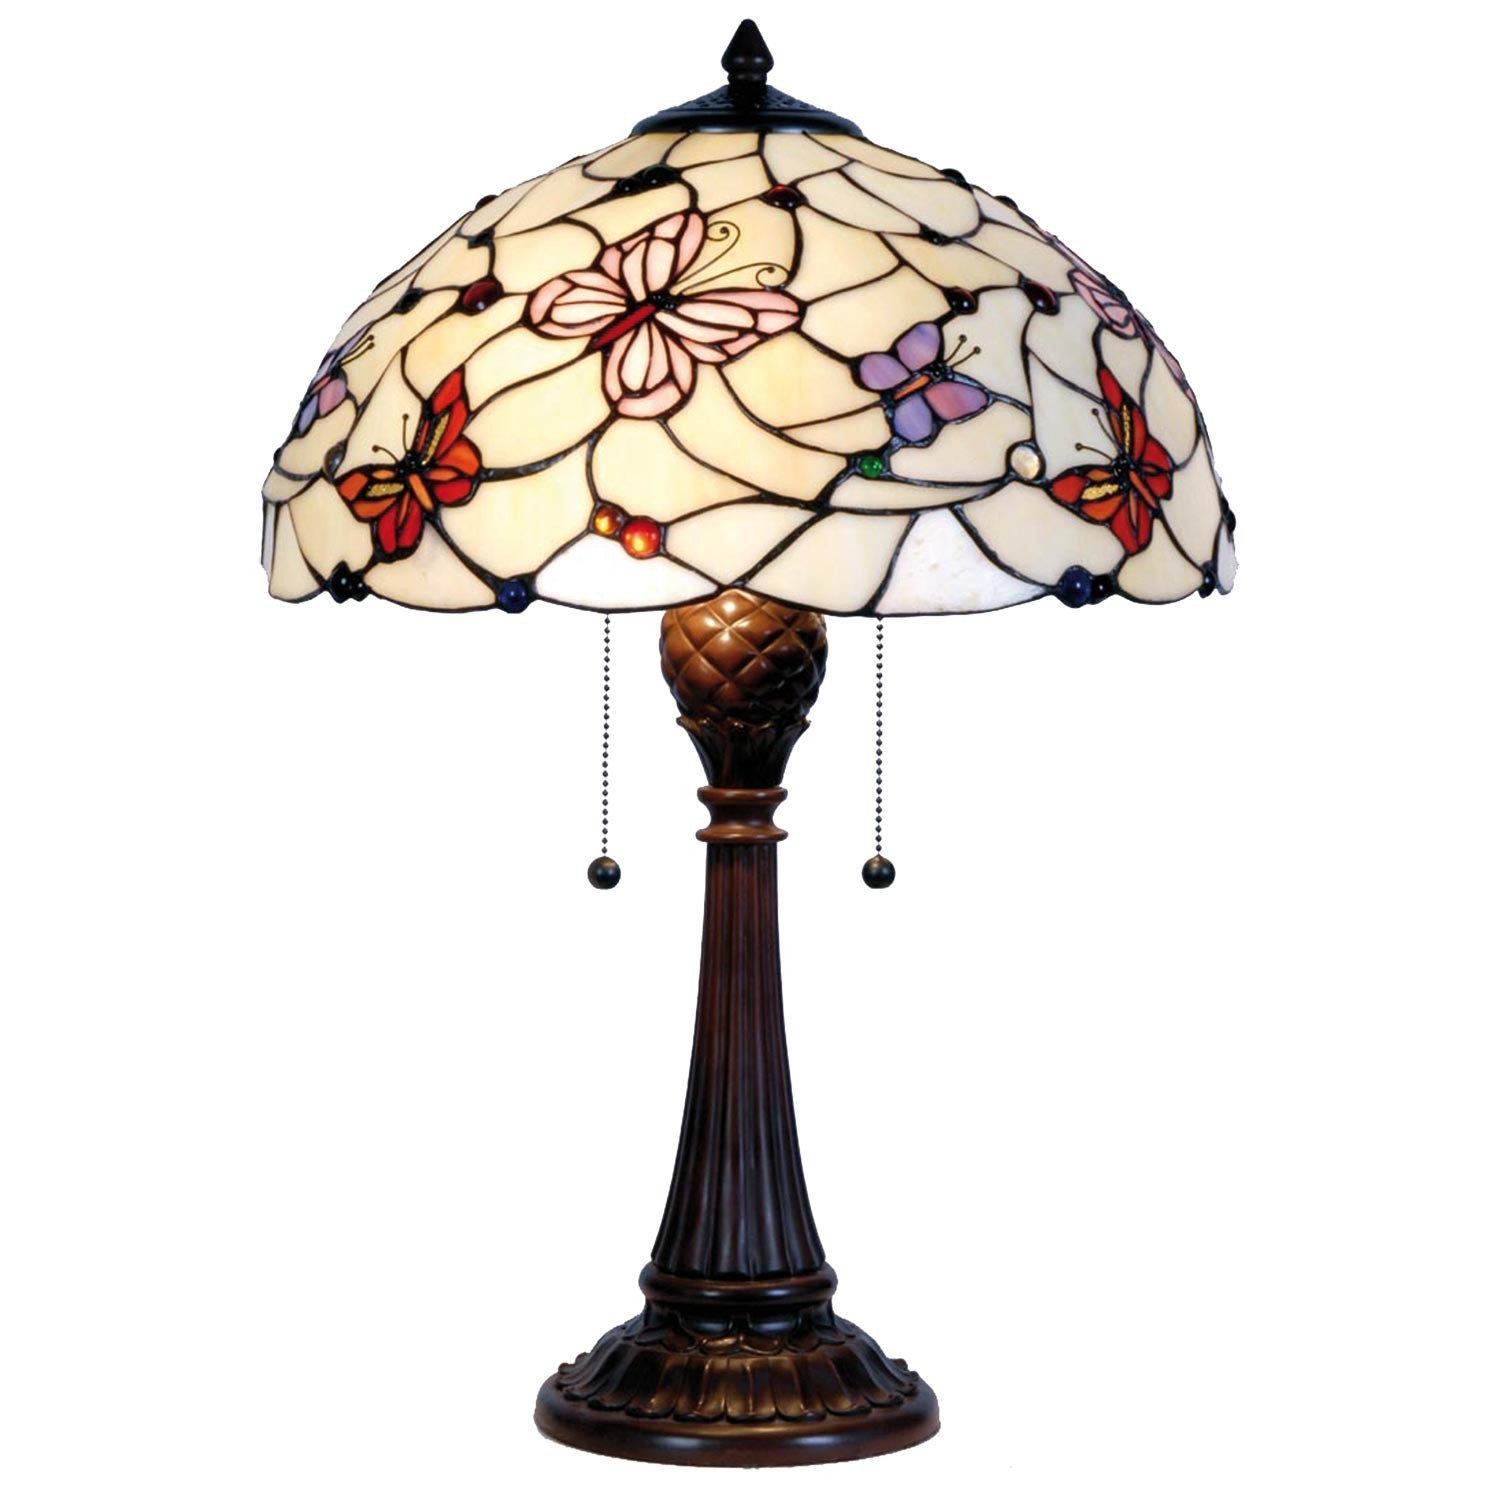 Stolní lampa Tiffany Butterfly Garden - Ø 41*60 cm 2x E27 / Max 60w 5LL-5365